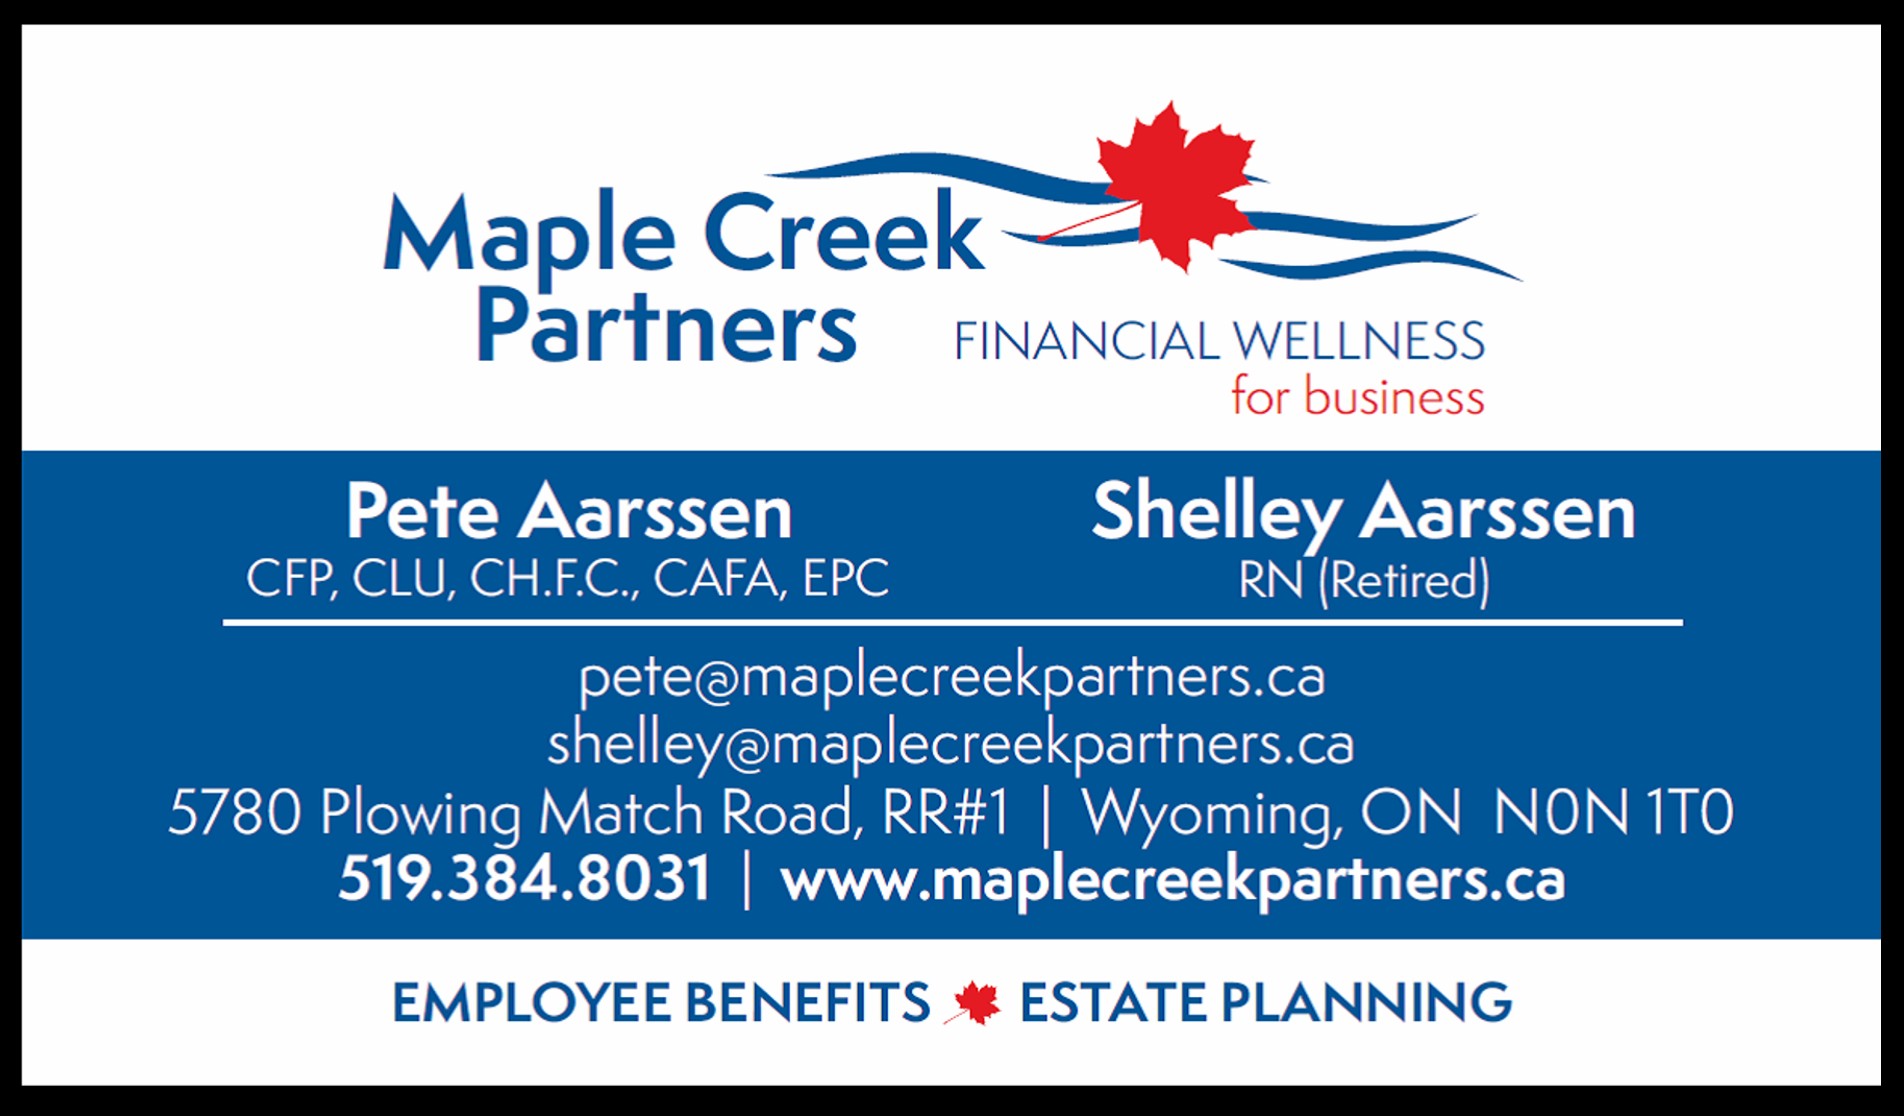 Maple Creek Partners (Pete Aarssen)